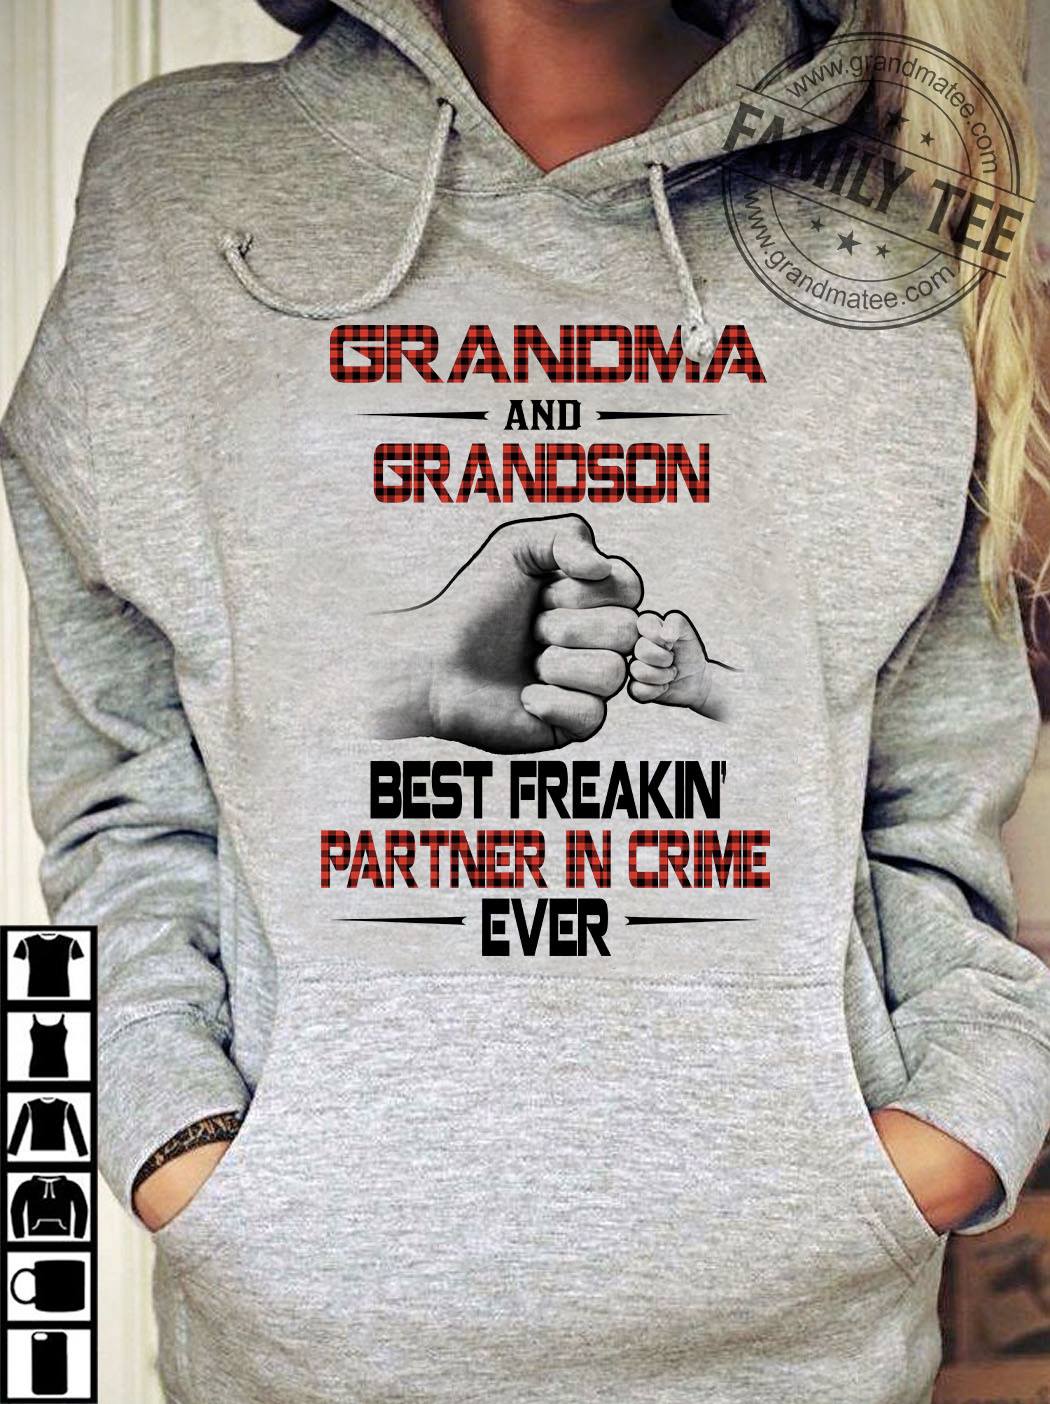 Grandma and grandson best partners in crime for life - grandma and grandson